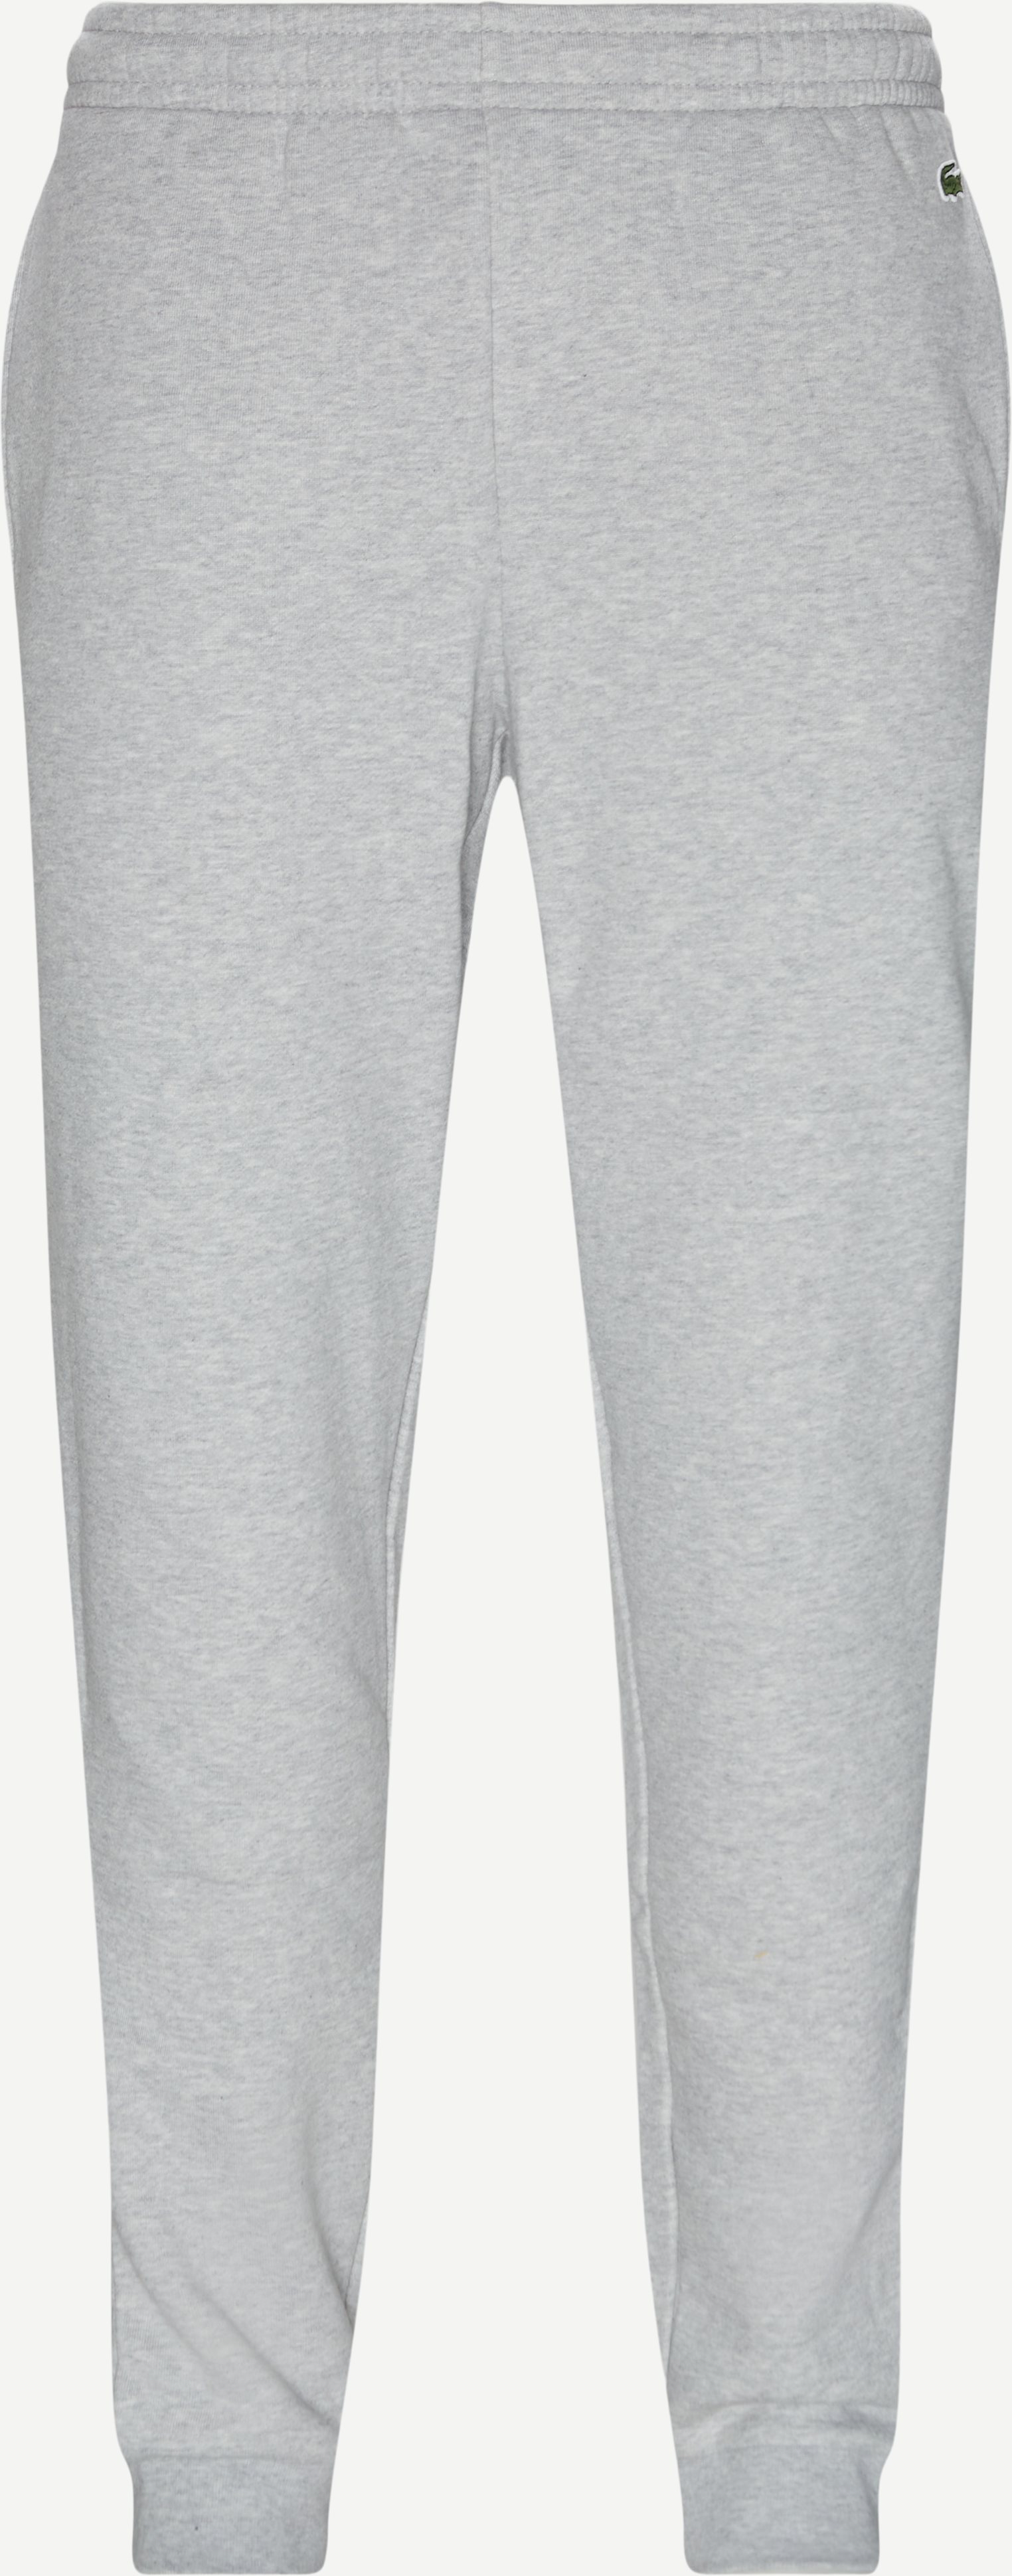 Fleece Trckpants - Trousers - Regular fit - Grey